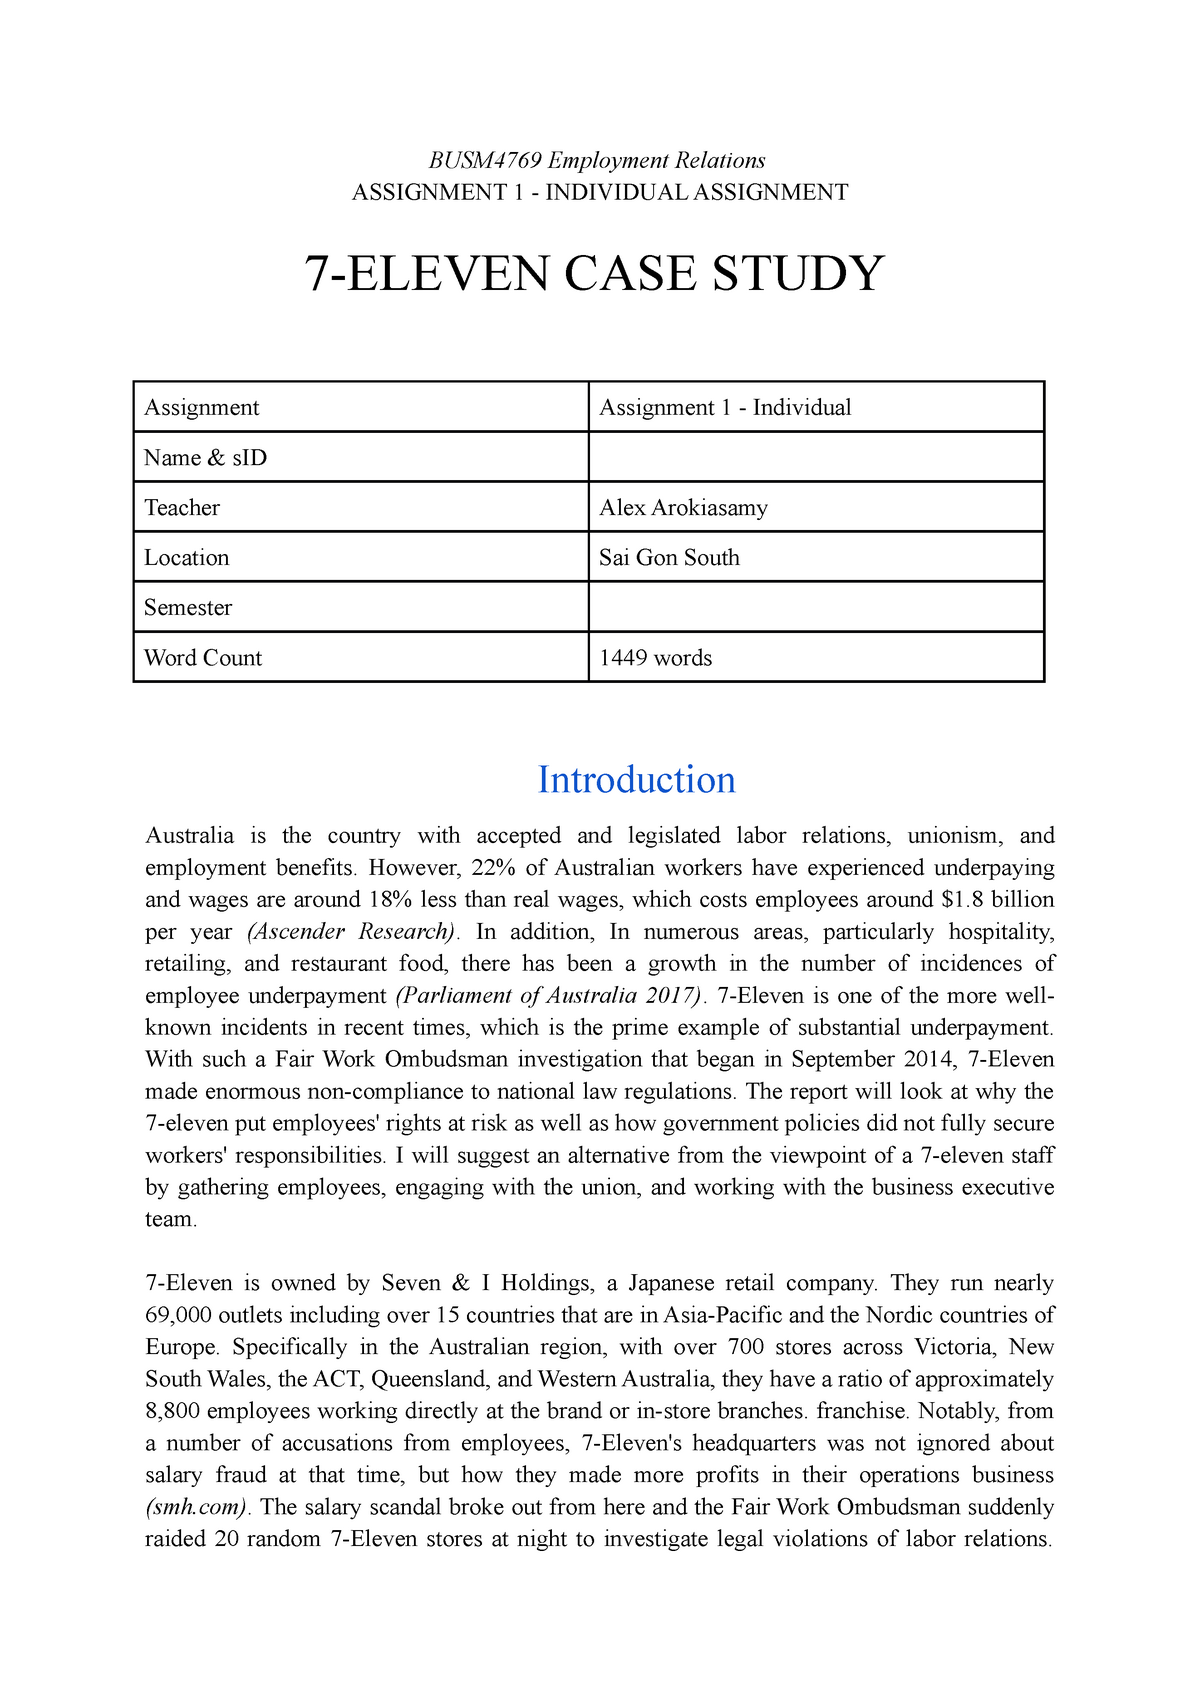 7 eleven case study analysis